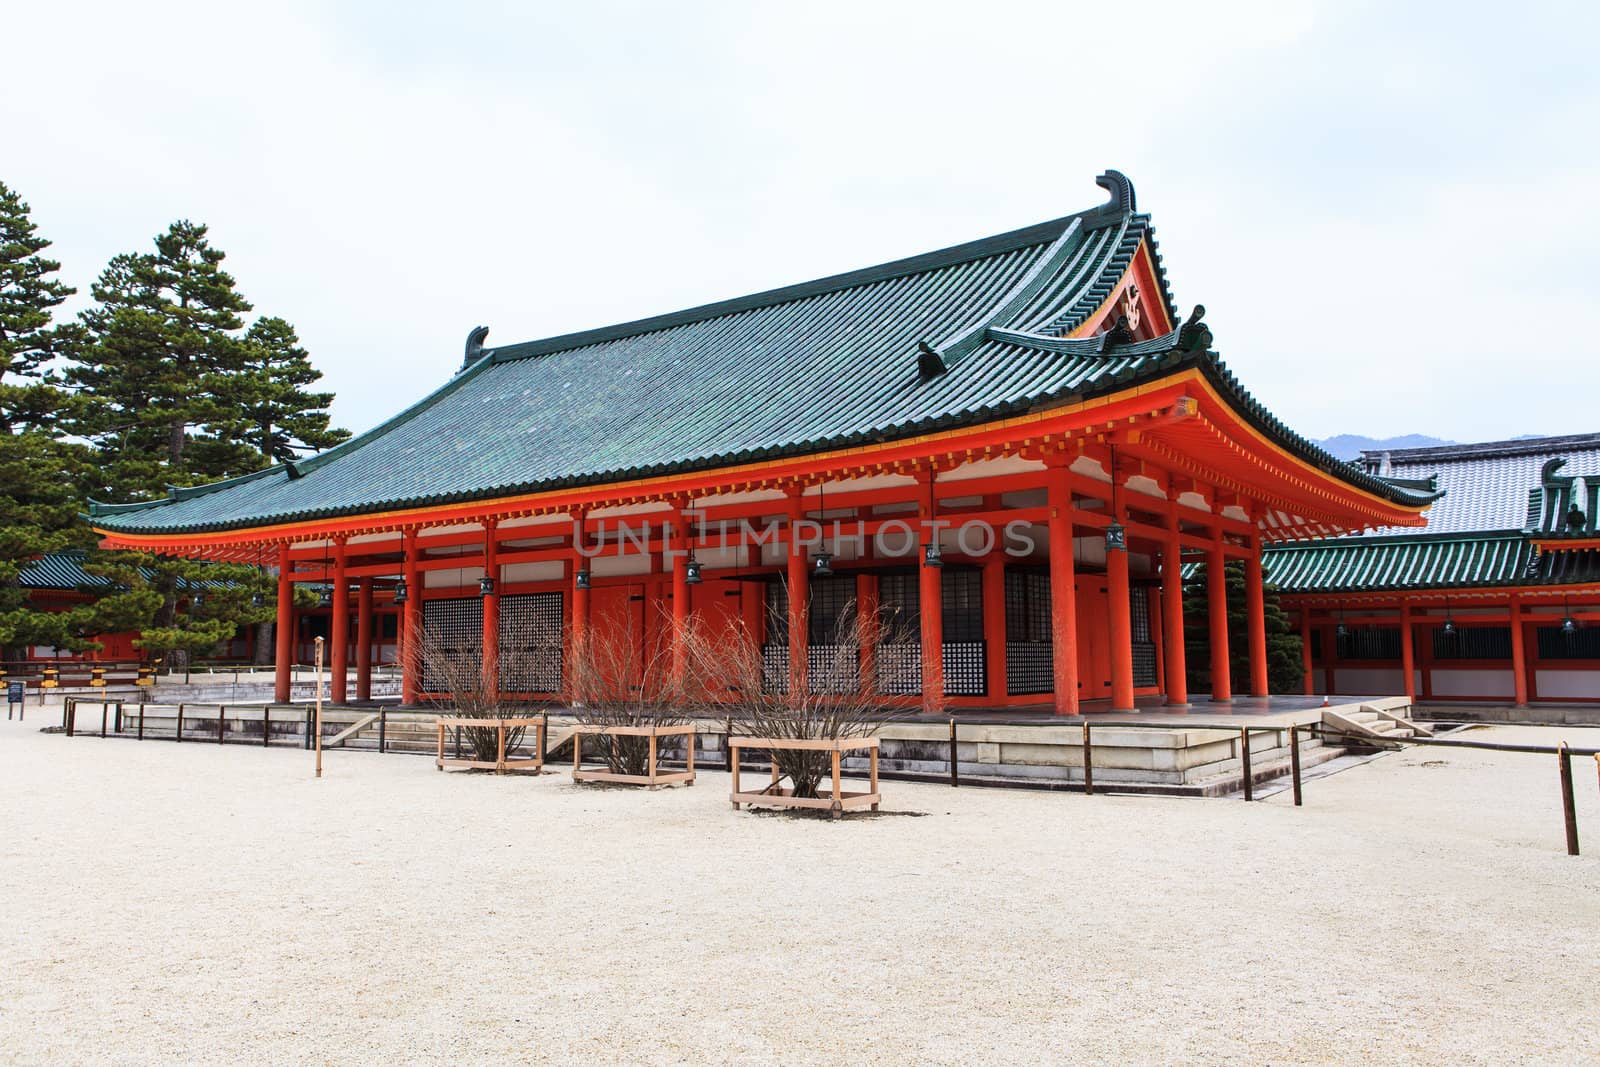 Heian Shrine by thanomphong